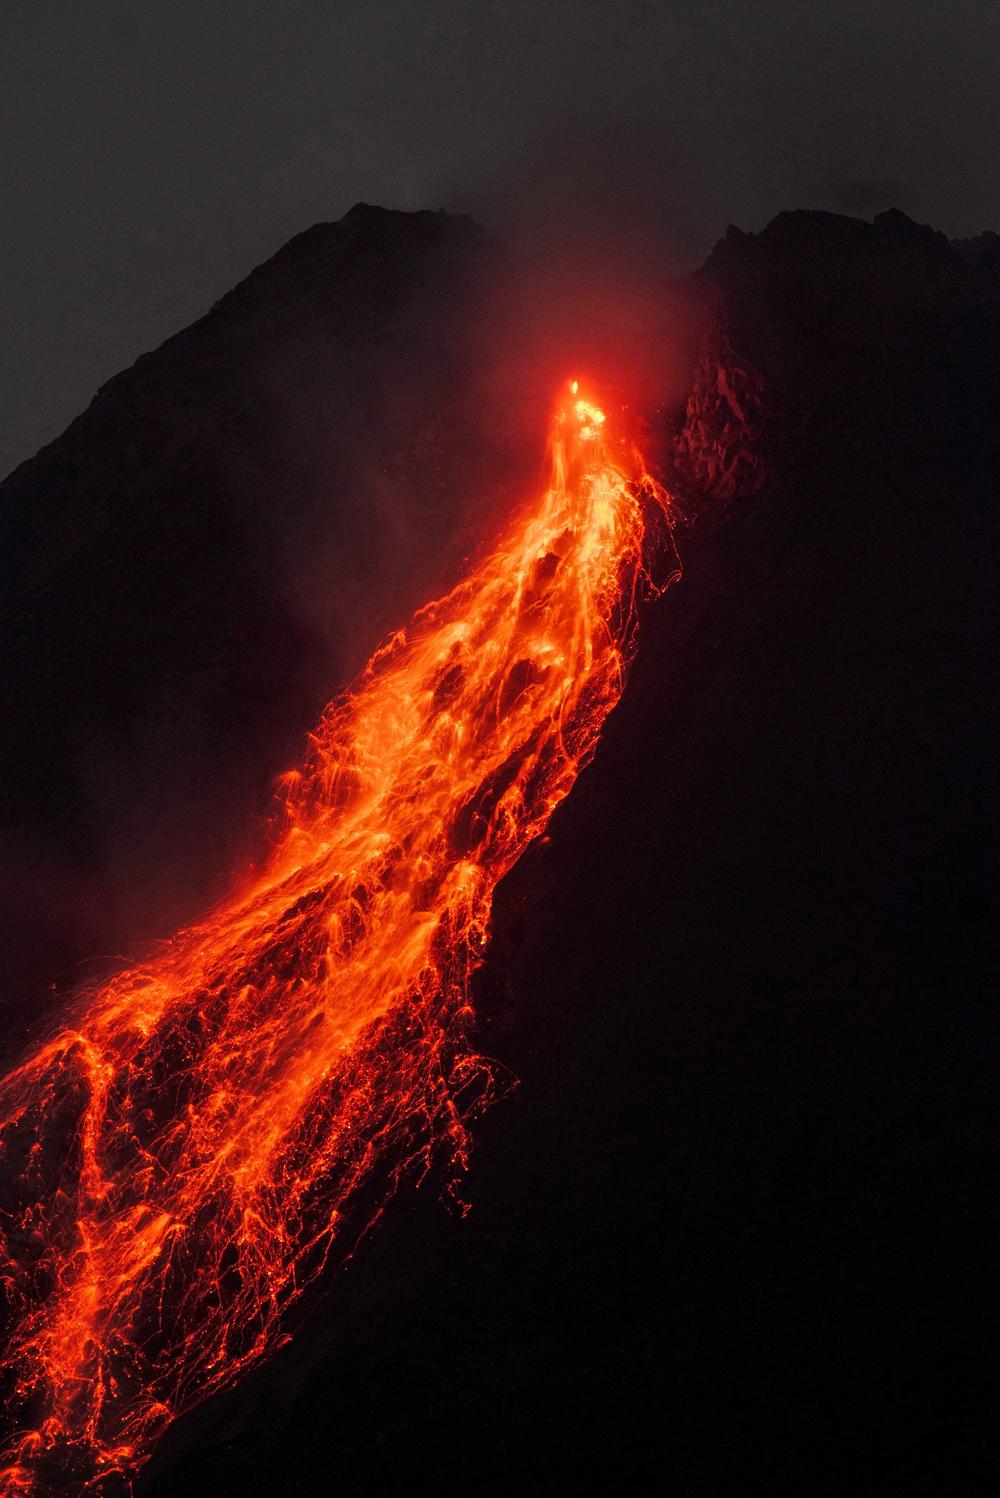 Mount Merapi's 2010 eruption killed 347 people.